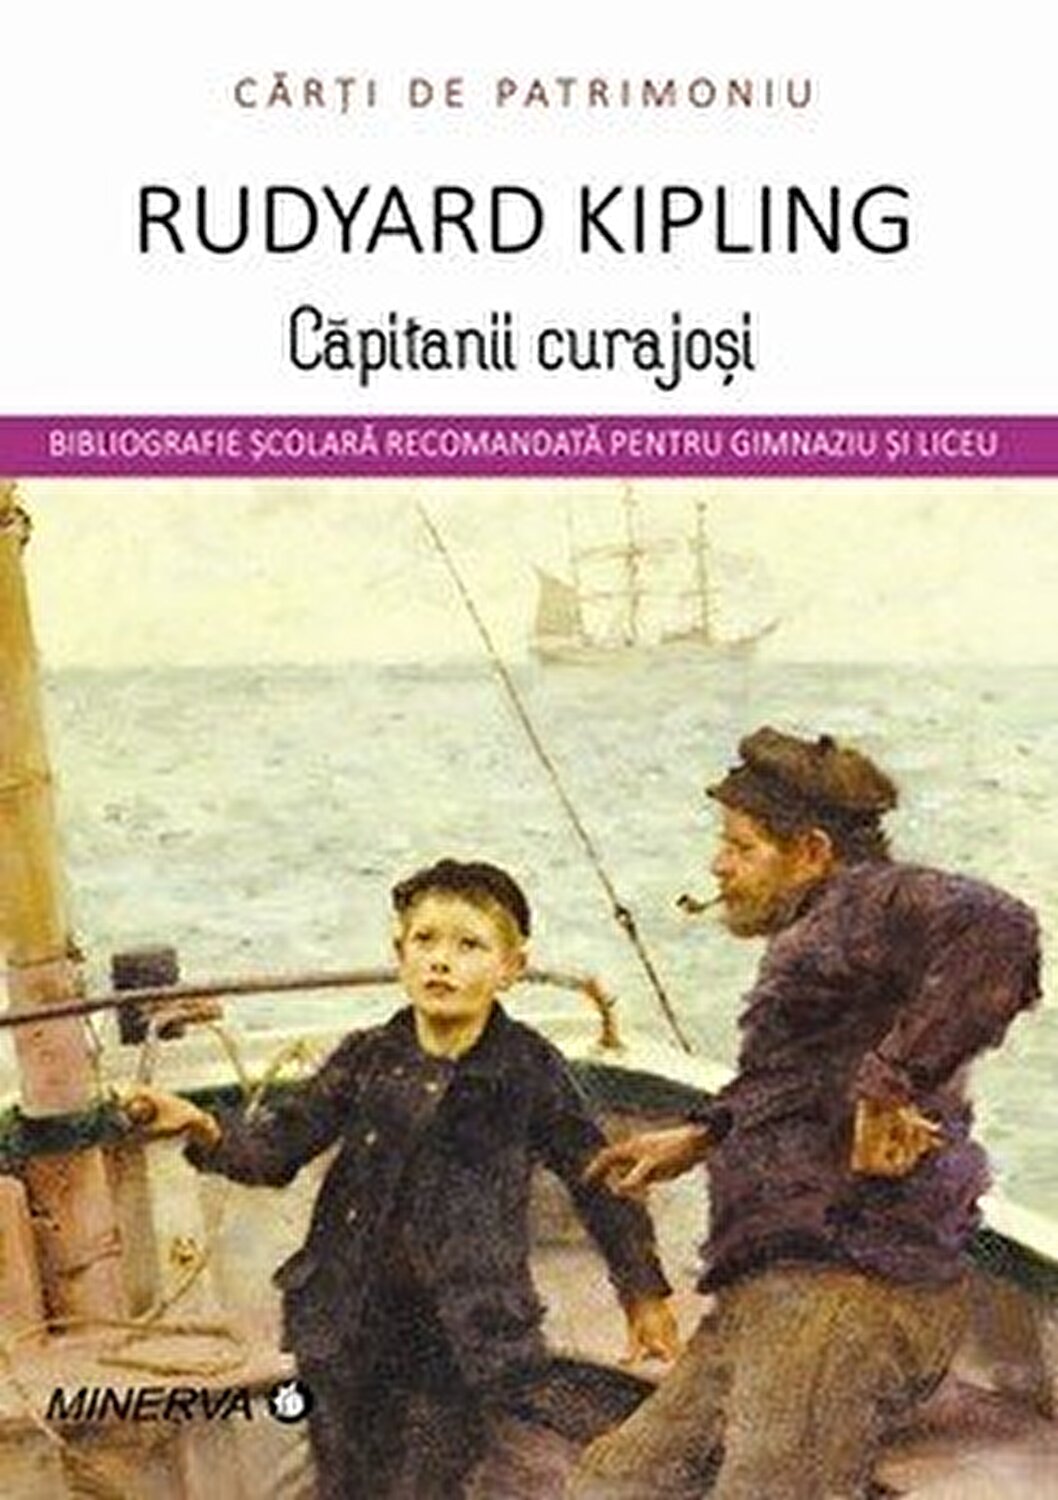 Capitanii curajosi | Rudyard Kipling carturesti.ro